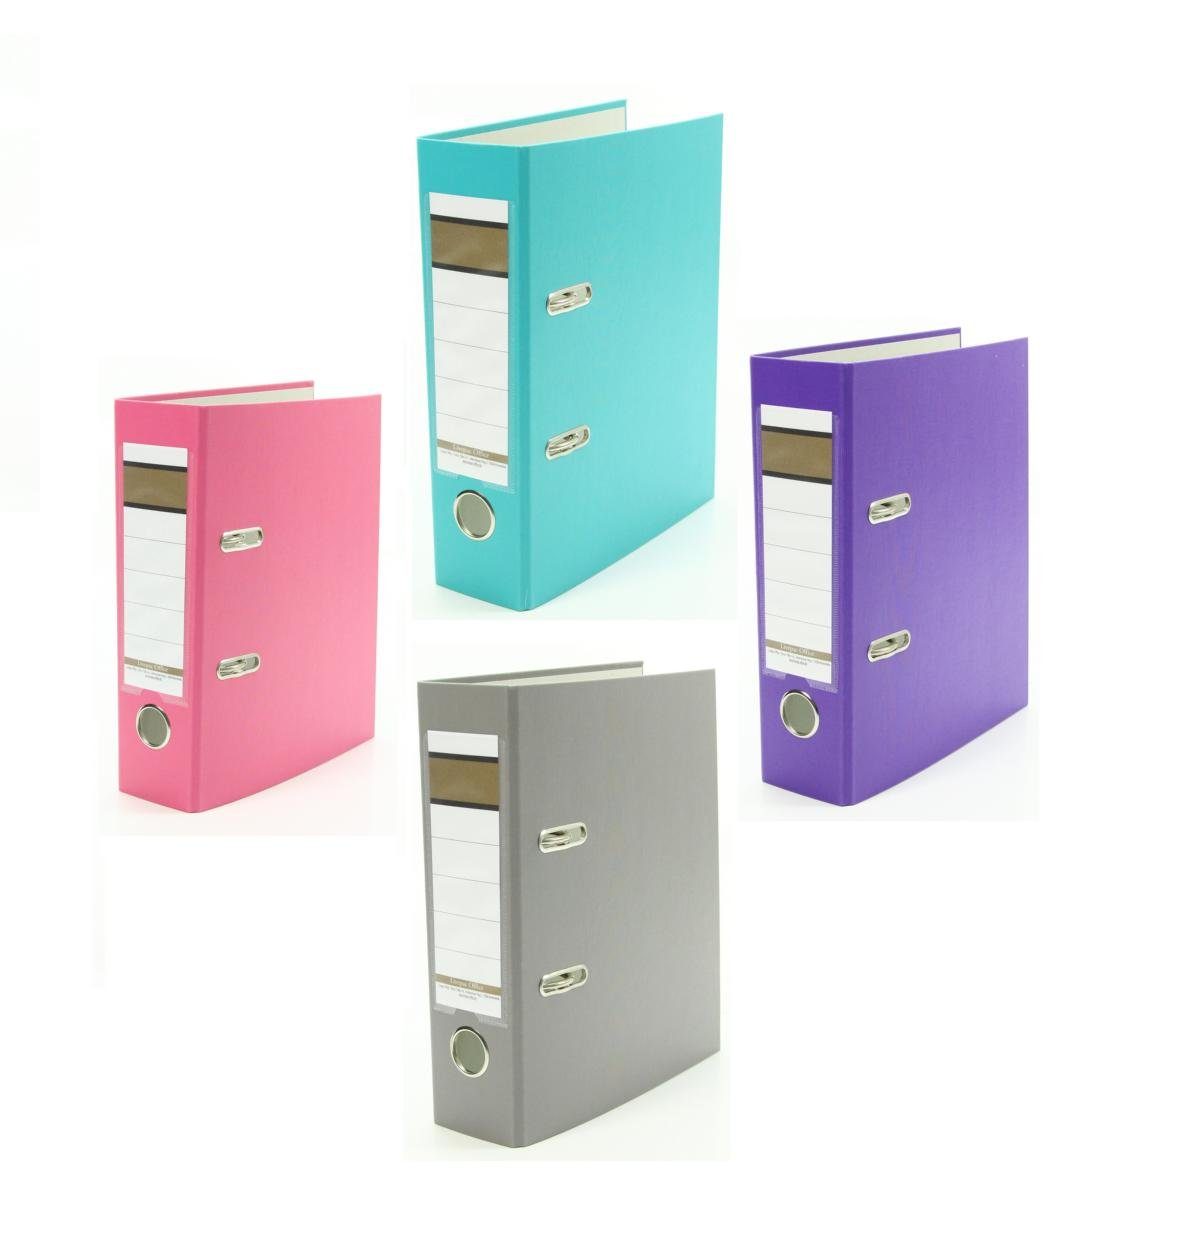 Livepac Office Aktenordner 4x Ordner / DIN A5 / 75mm / Farbe: je 1x pink, türkis, lila und grau